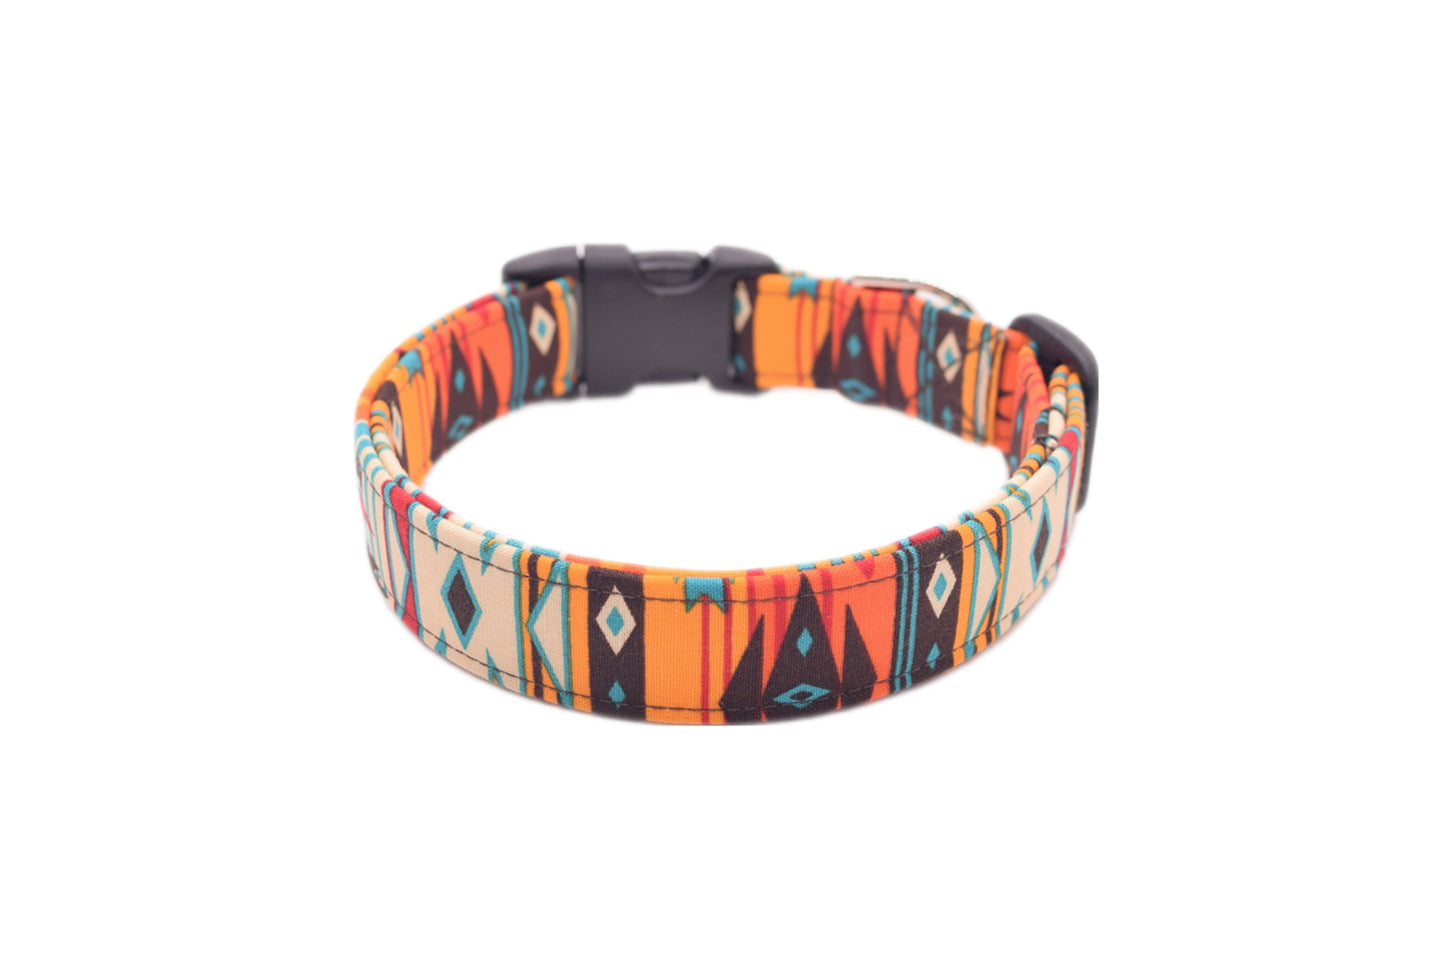 Modern Southwest Tribal Dog Collar - Handmade by Kira's Pet Shop